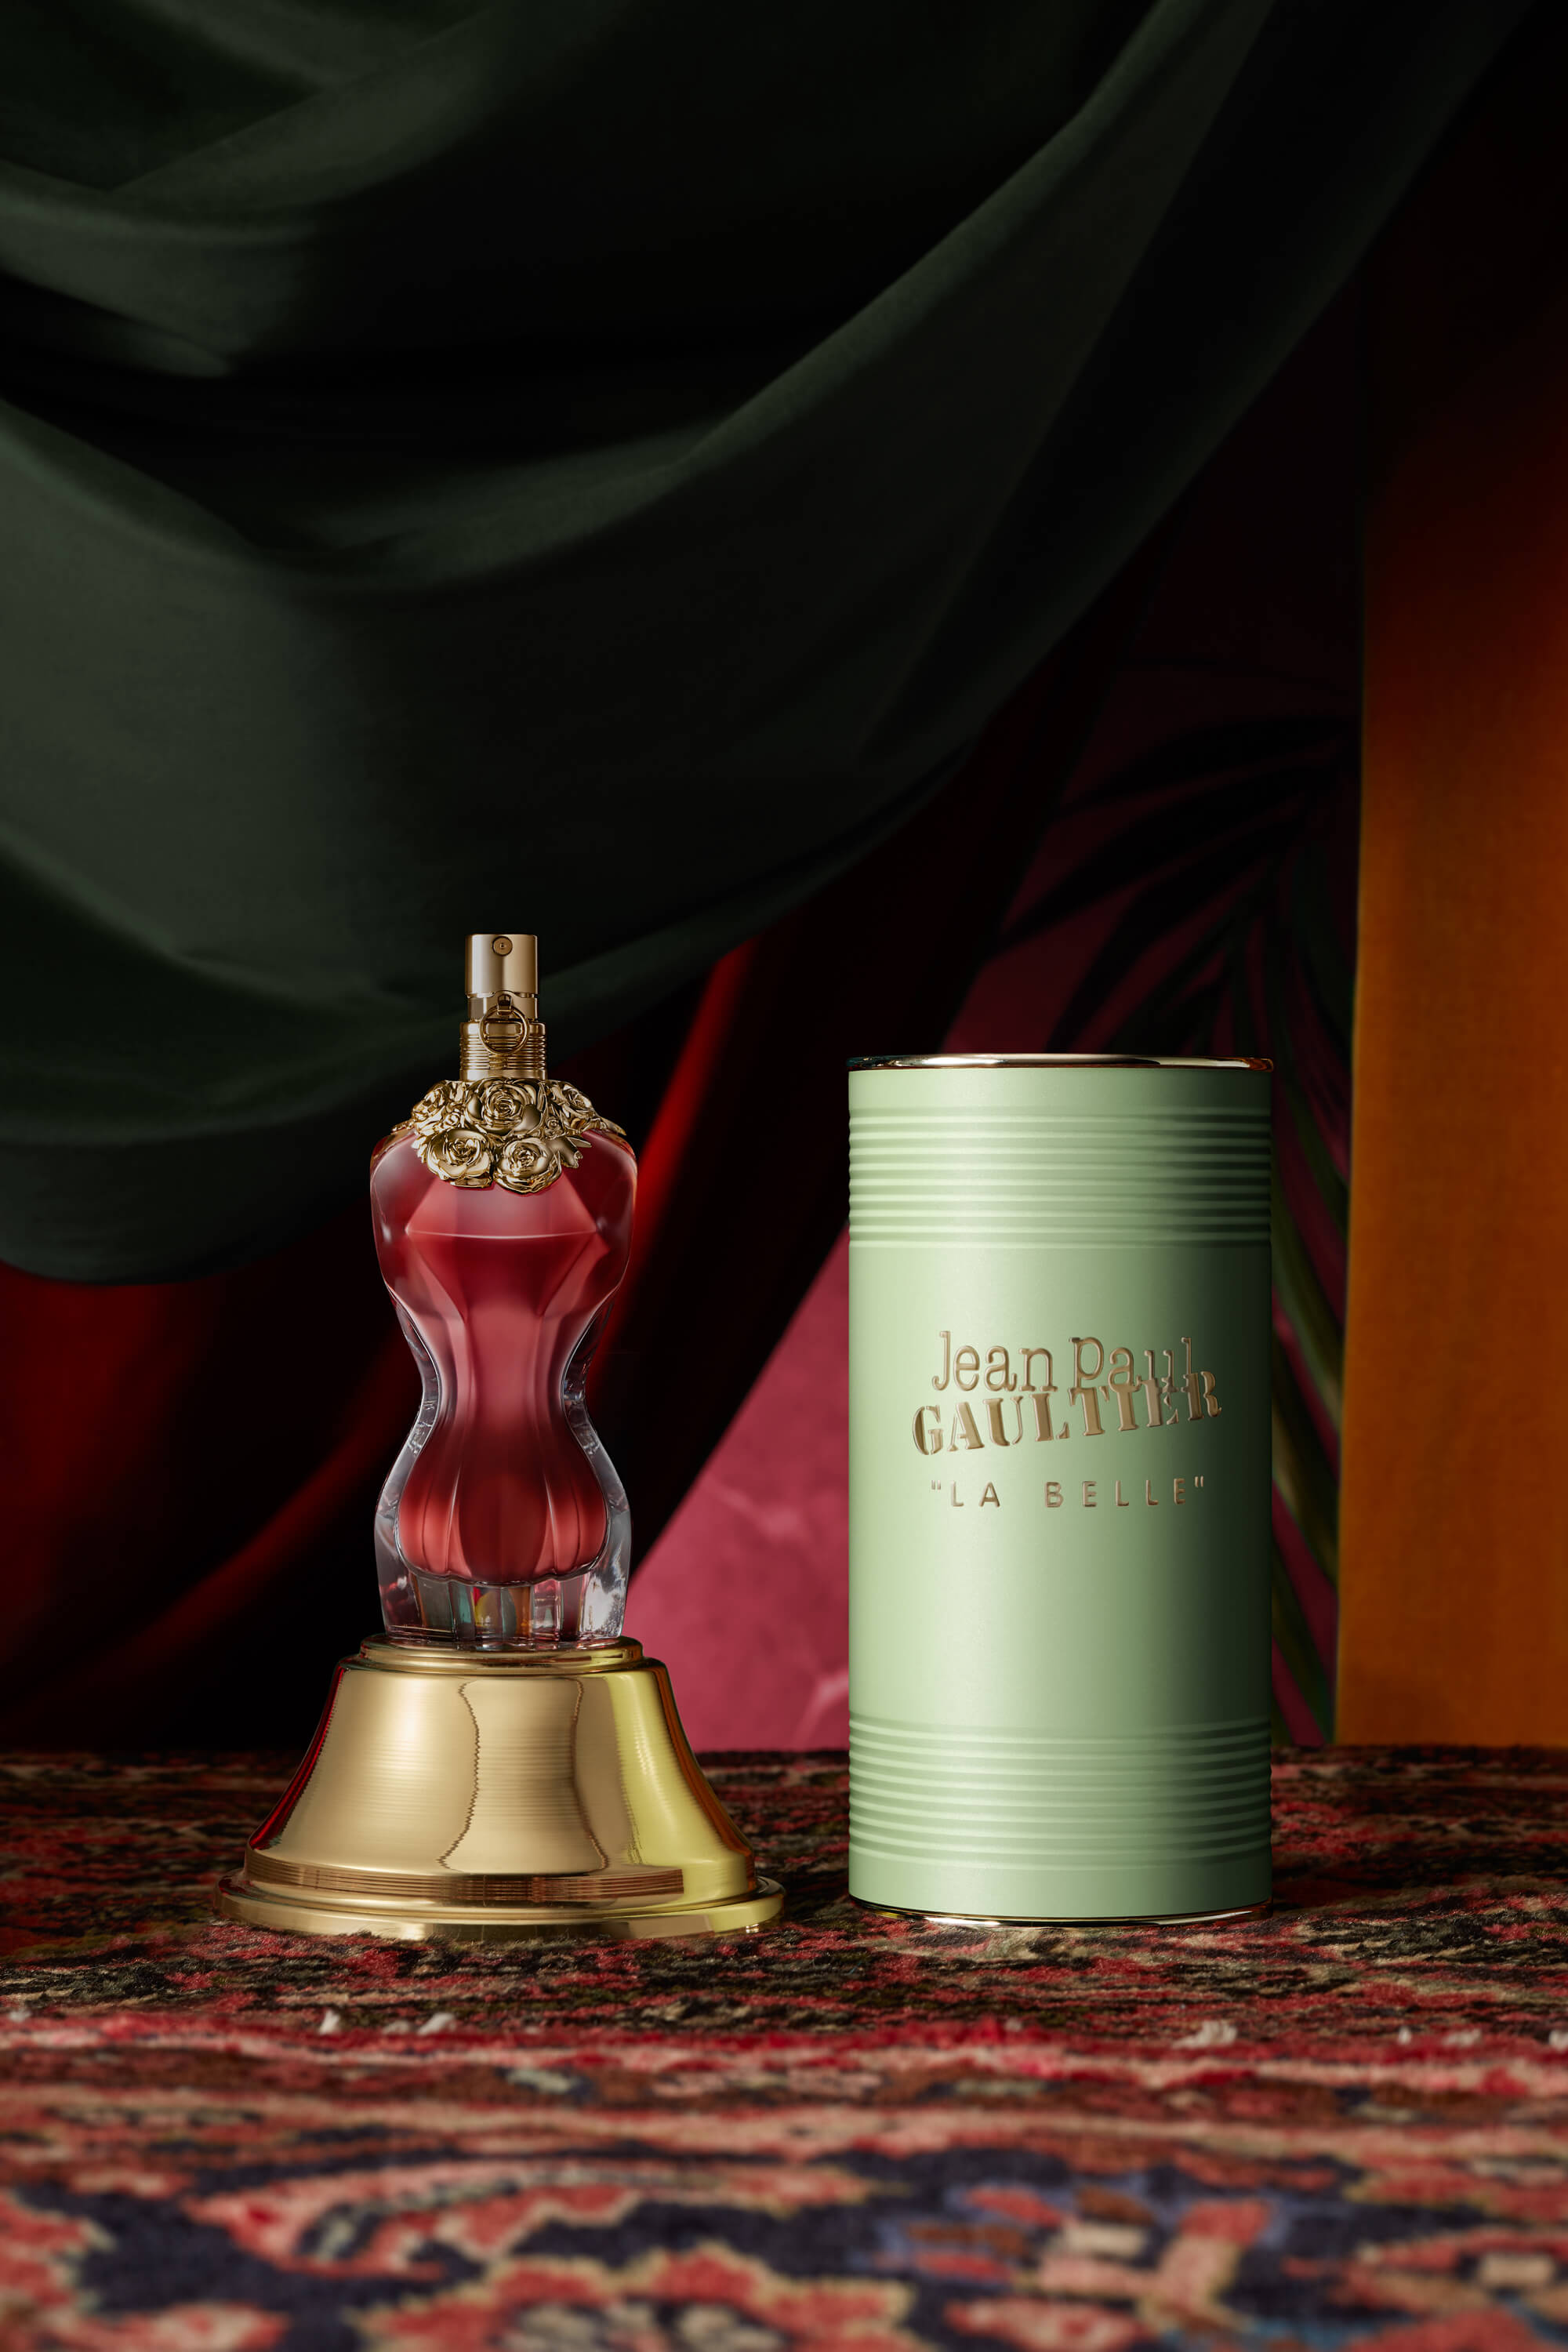 Jean Paul Gaultier Scandal La Belle EDP 6 ml   น้ำหอมกลิ่น Oriental Vanilla สำหรับผู้หญิง เปิดตัวในปี 2019 La Belle สร้างโดย Quentin Bisch และ Sonia Constant เปิดกลิ่นด้วยวานิลลา ตามมาด้วยเบอร์กาม็อตสดและผลแพร์ ที่ให้ความหอมหวานสดชื่น